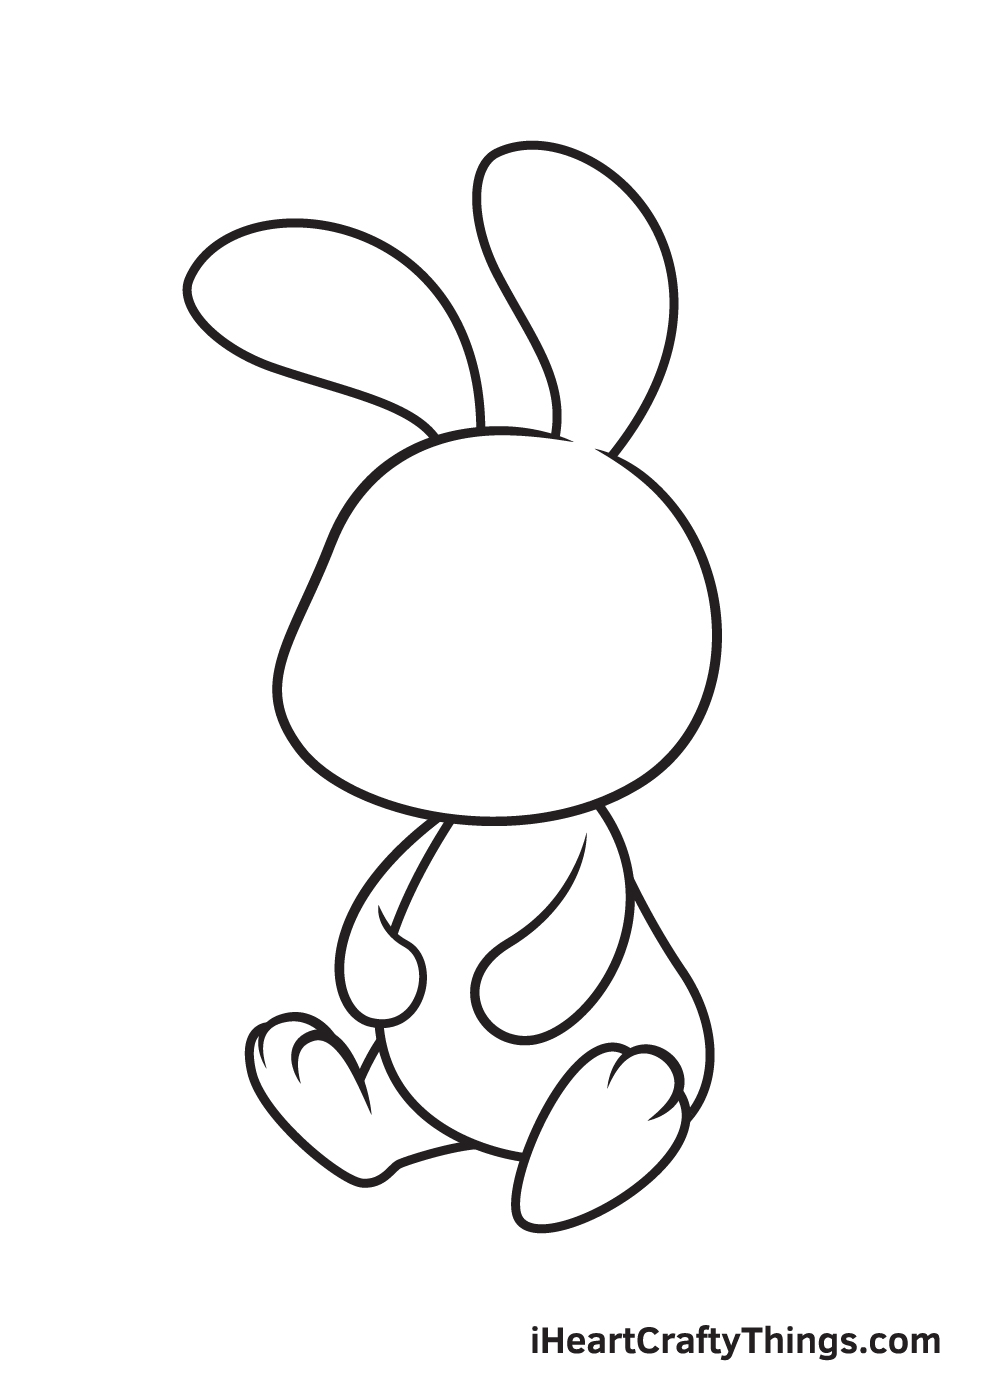 How to Draw a Bunny - Easy Drawing Art-saigonsouth.com.vn